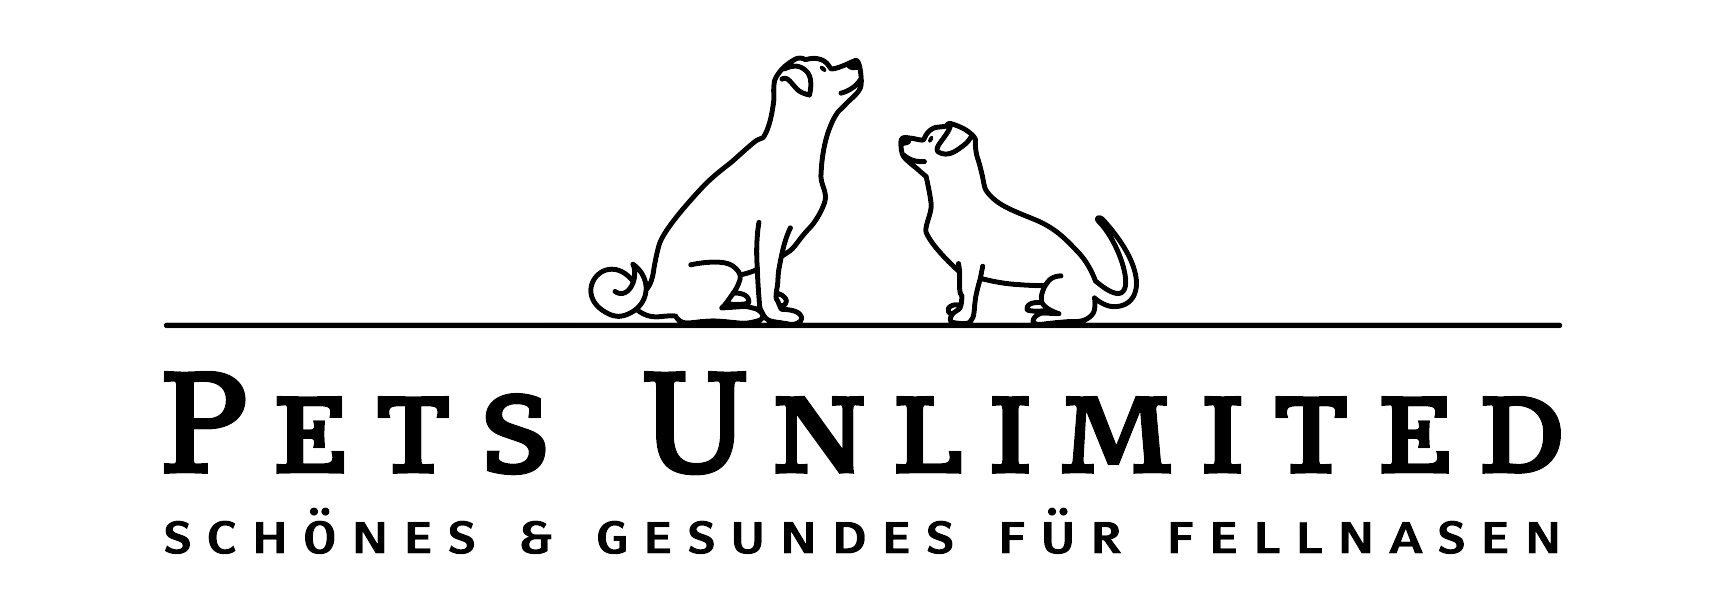 Pets Unlimited Logo